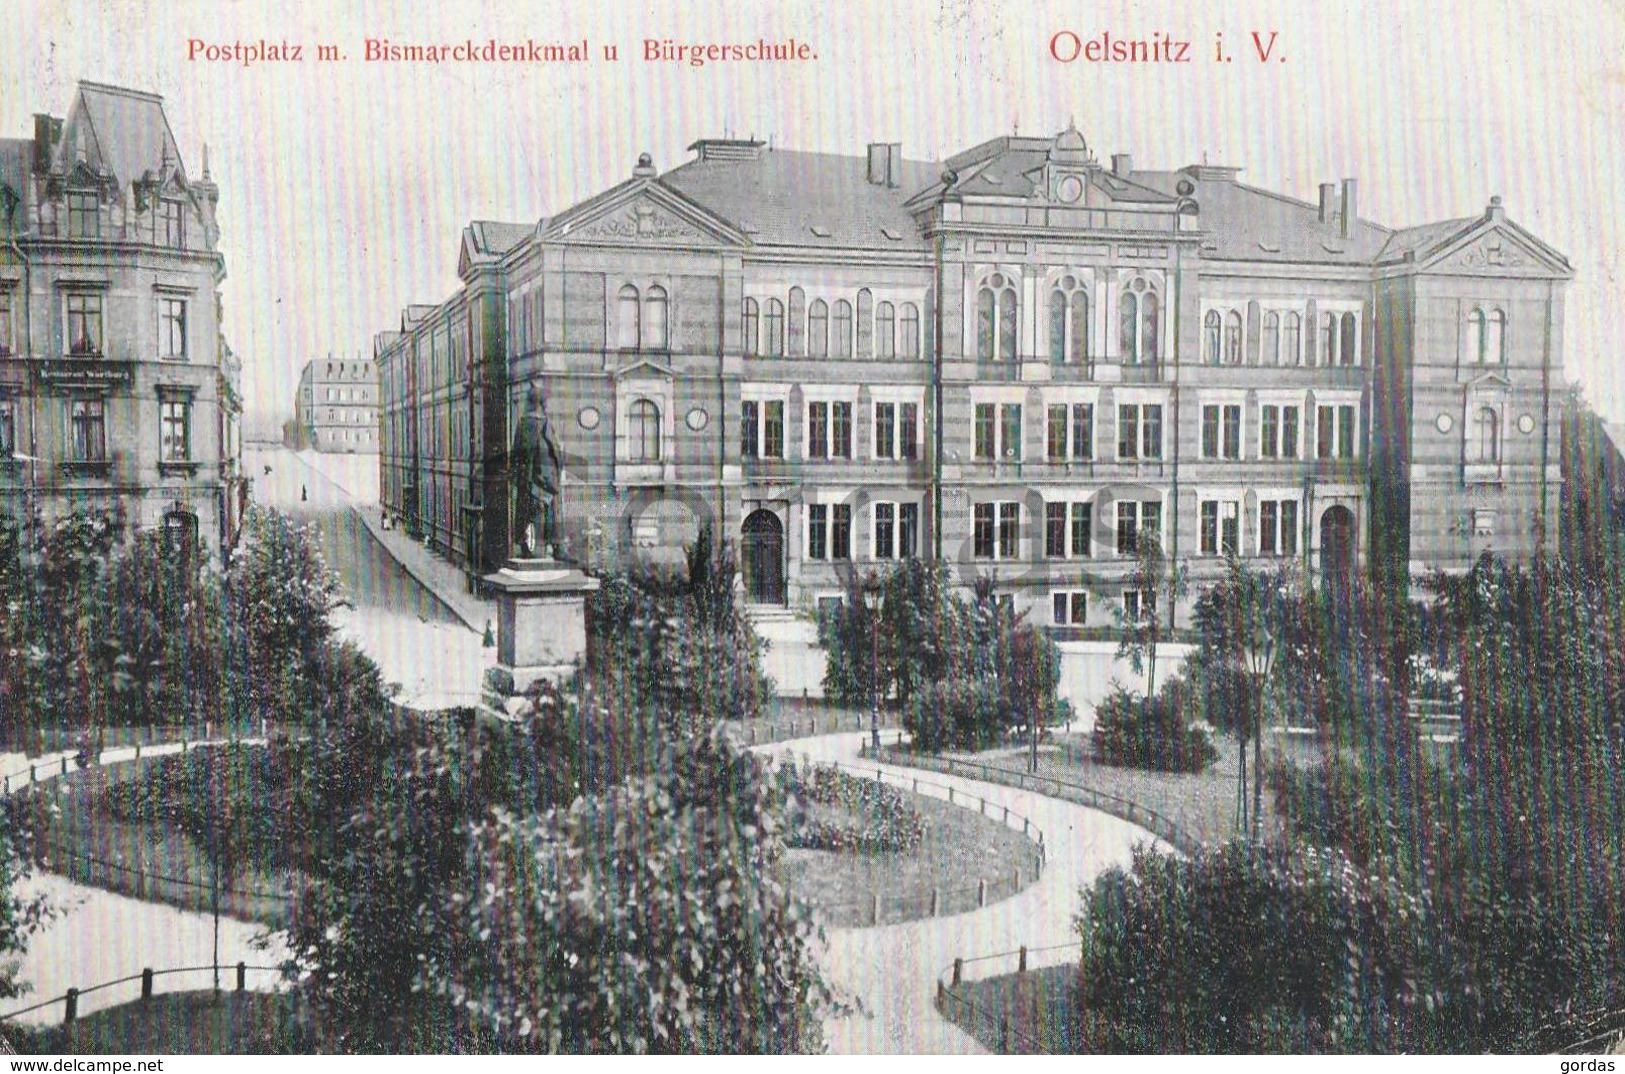 Germany - Oelsnitz In Vogtland - Postplatz - Bismarckdenkmal - Burgerschule - Oelsnitz I. Vogtl.